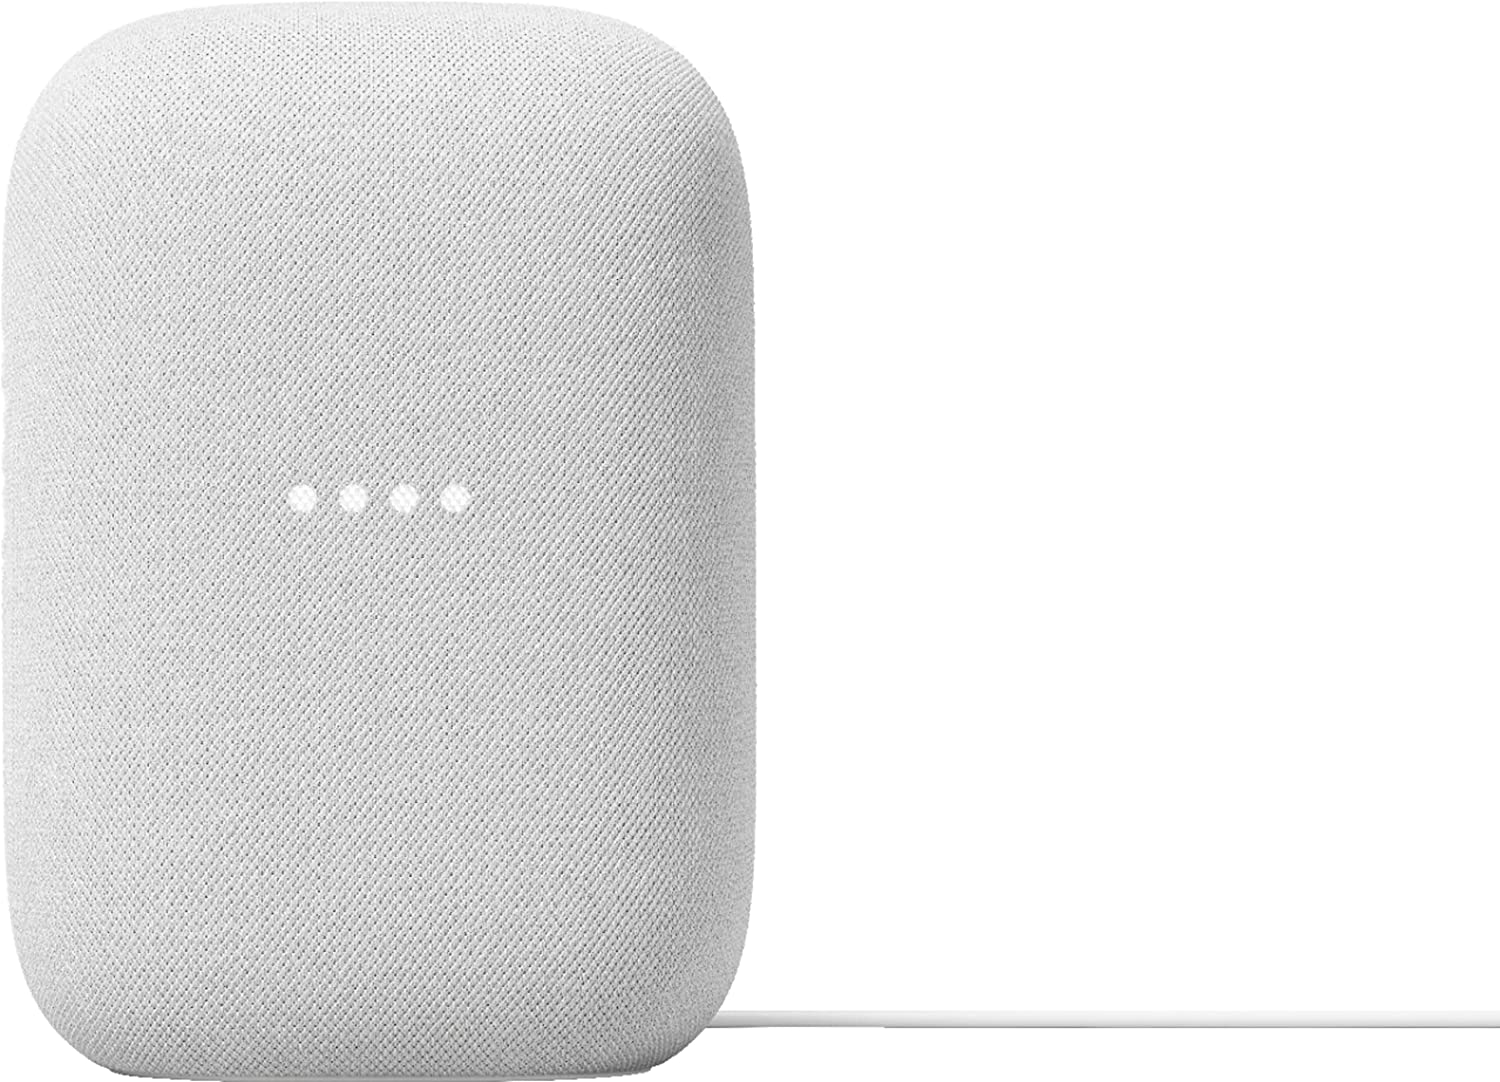 Google Nest Audio - Smart Speaker with Google Assistant - Chalk - image 1 of 4